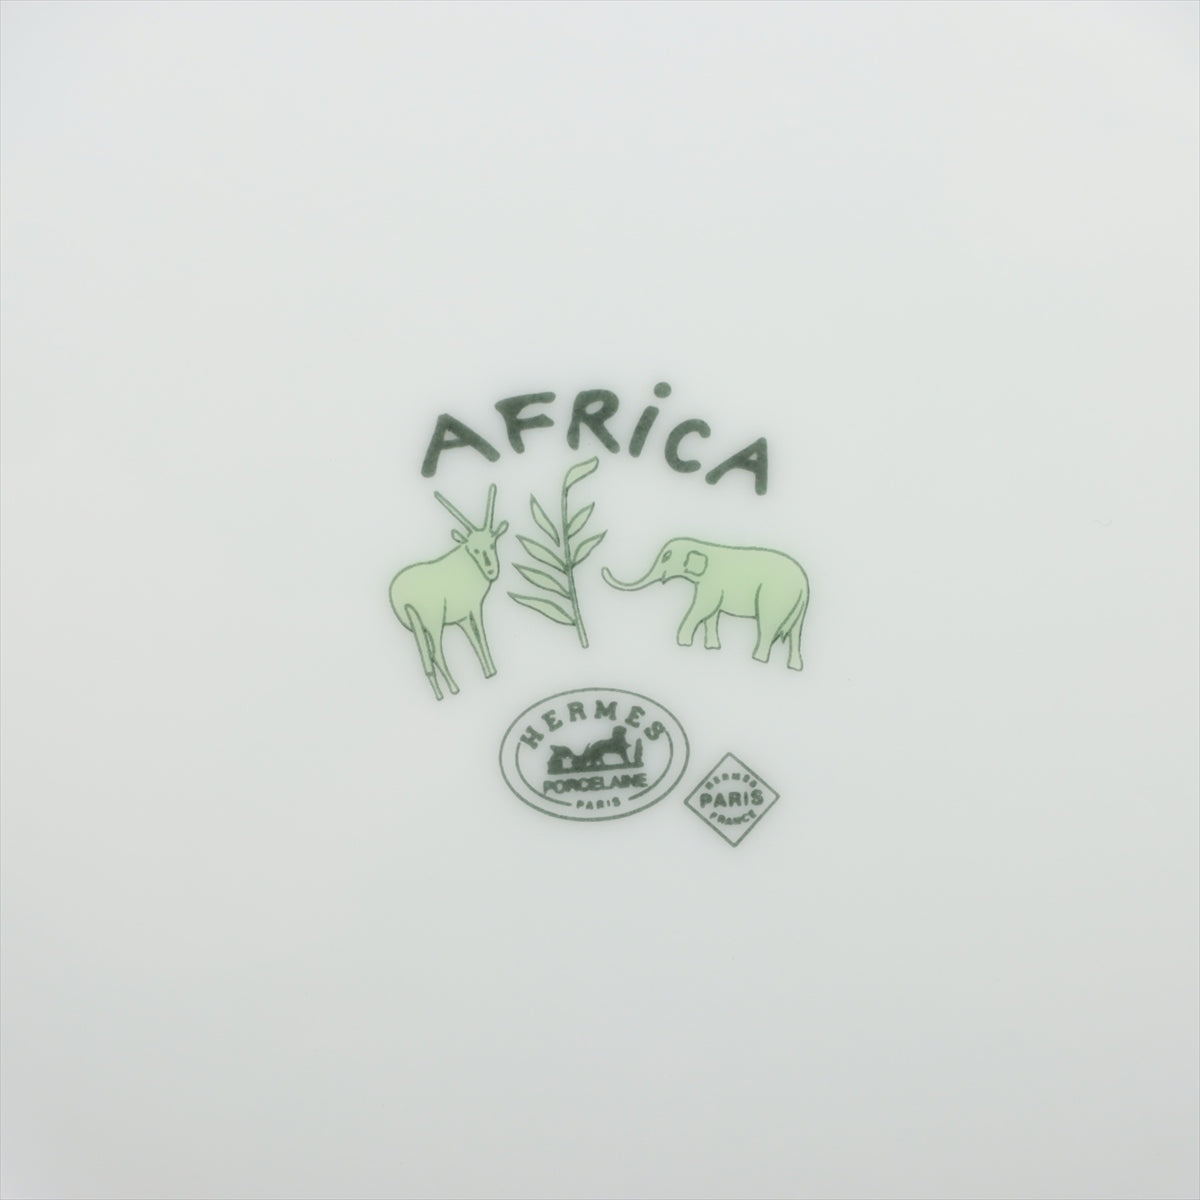 Hermès Africa plates Ceramic White